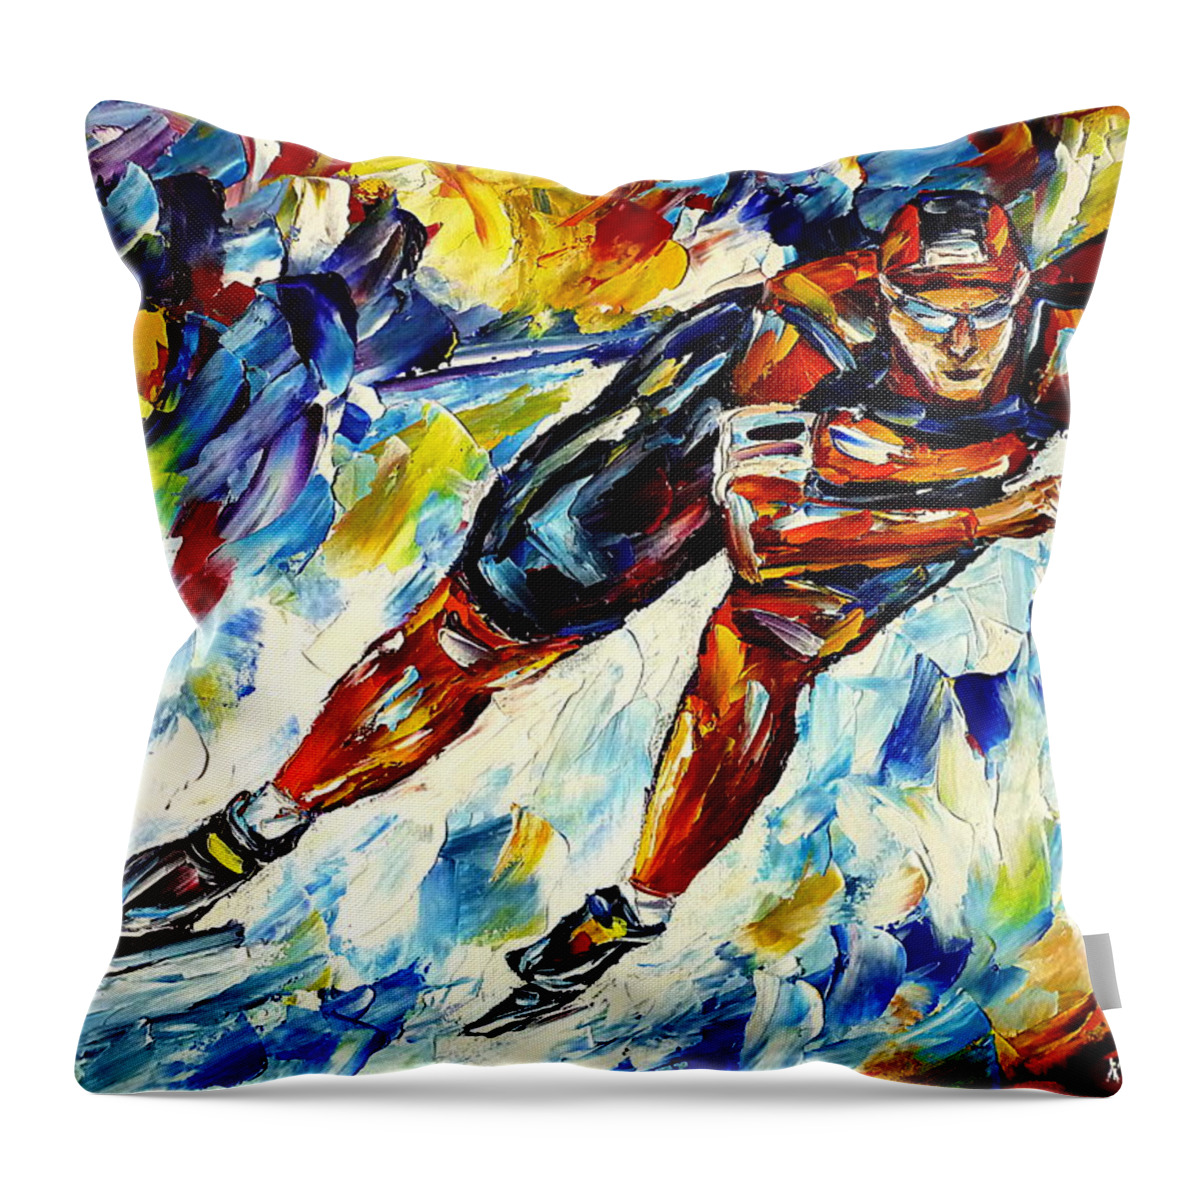 I Love Speed Skating Throw Pillow featuring the painting Speed Skater by Mirek Kuzniar